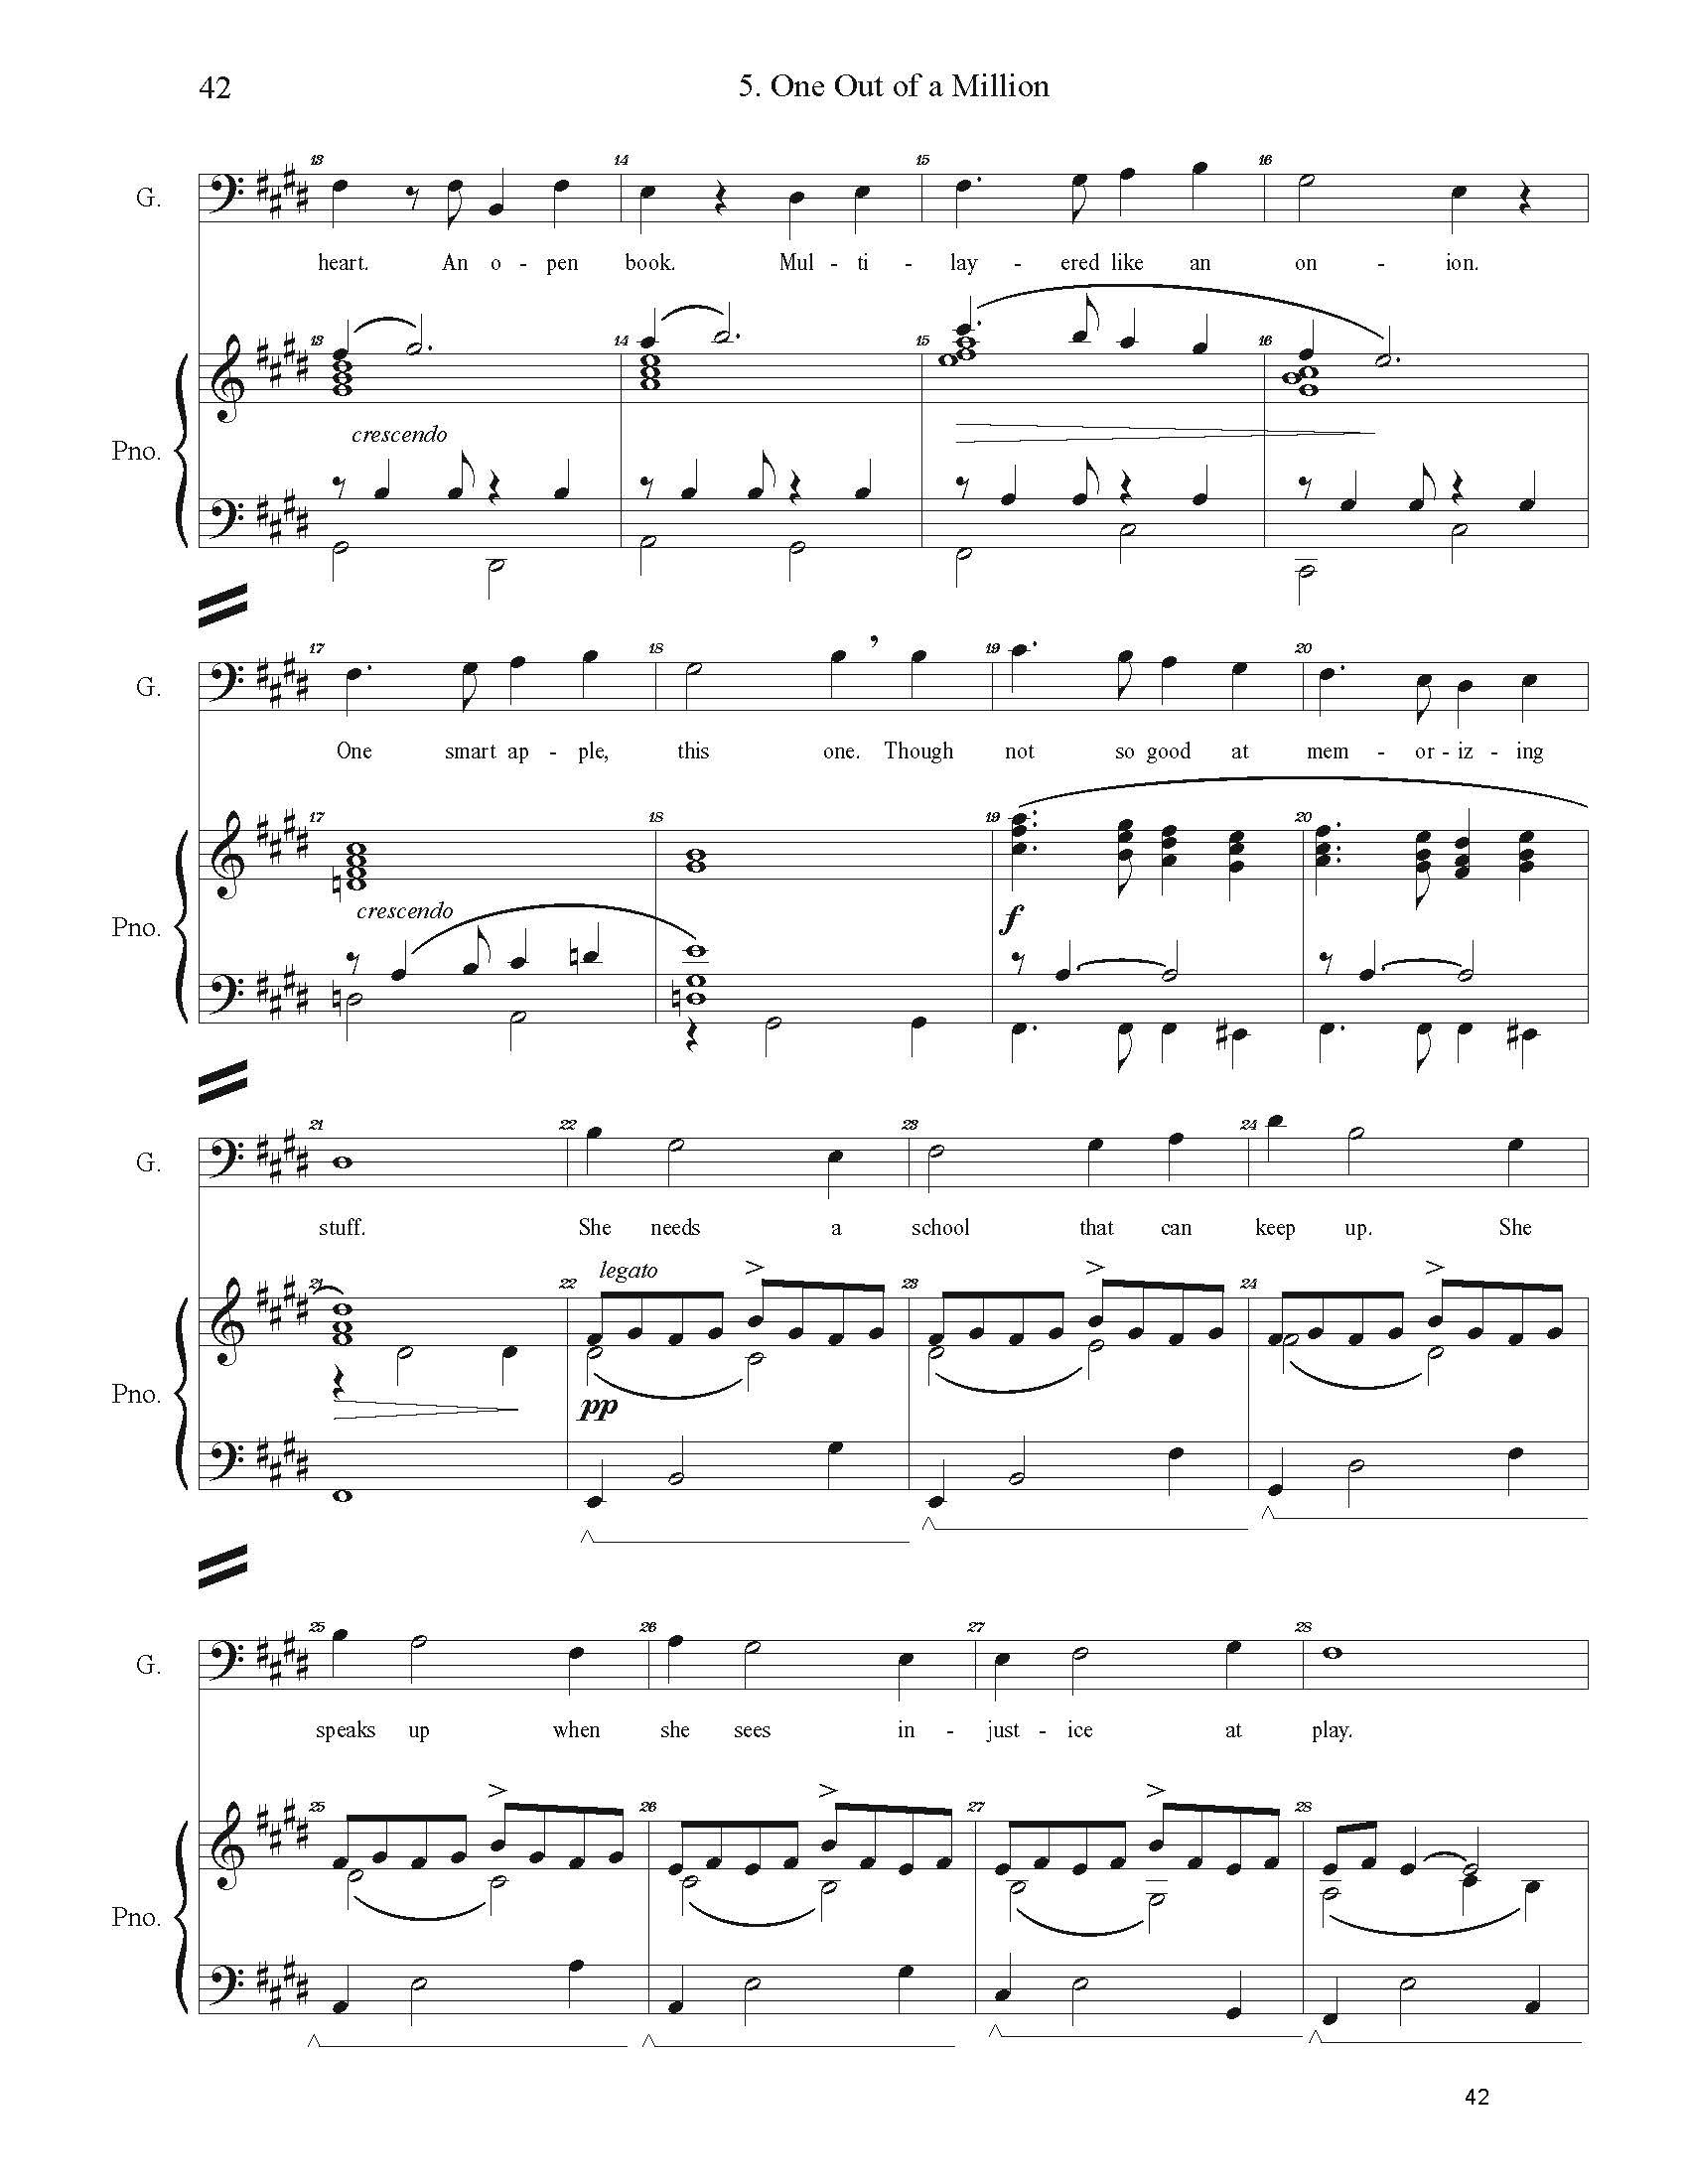 FULL PIANO VOCAL SCORE DRAFT 1 - Score_Page_042.jpg